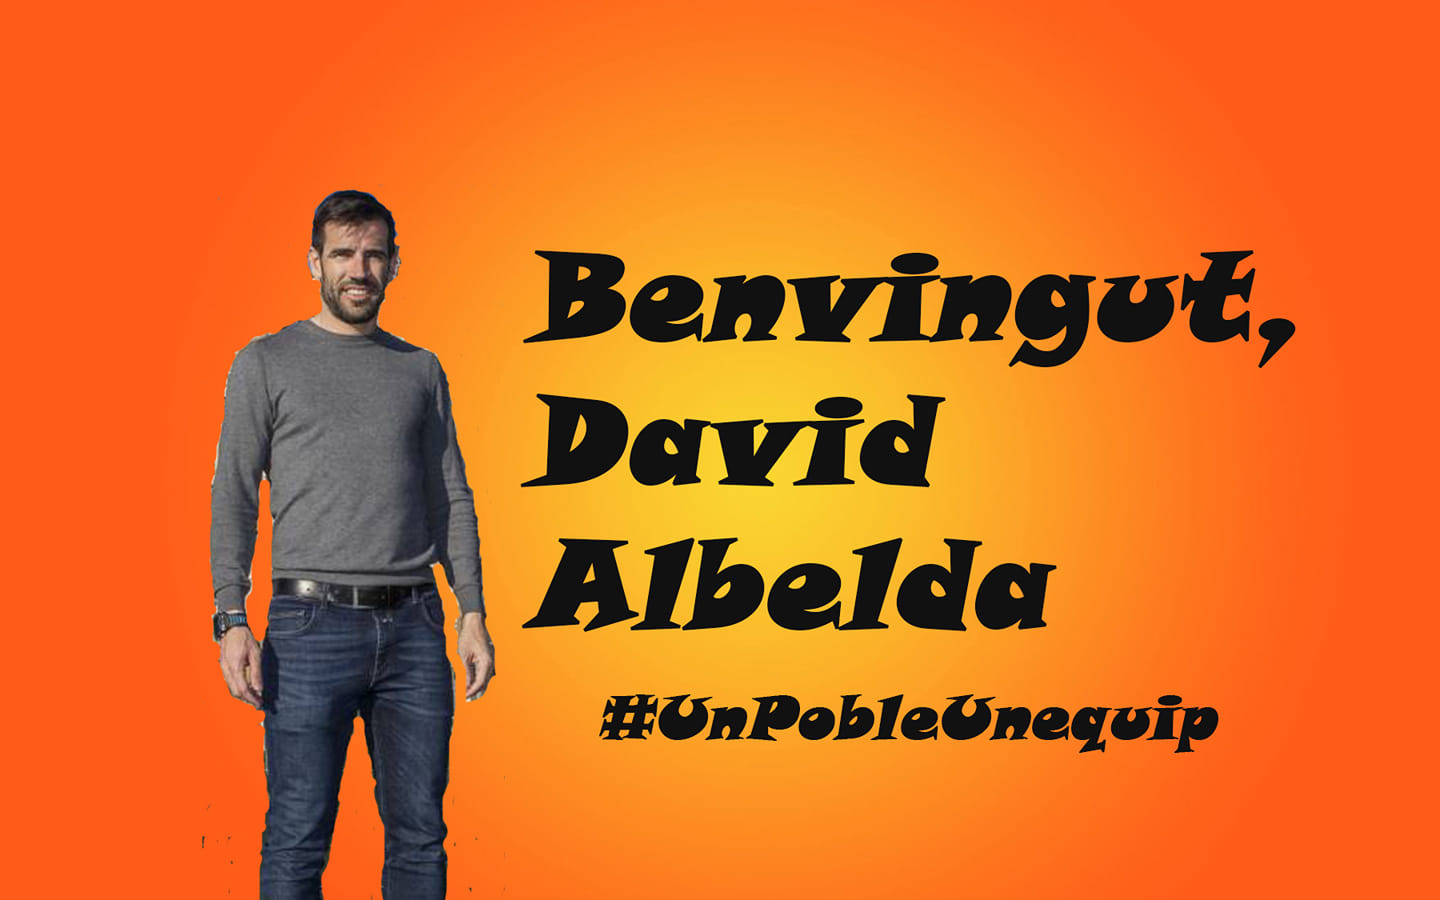 David Albelda